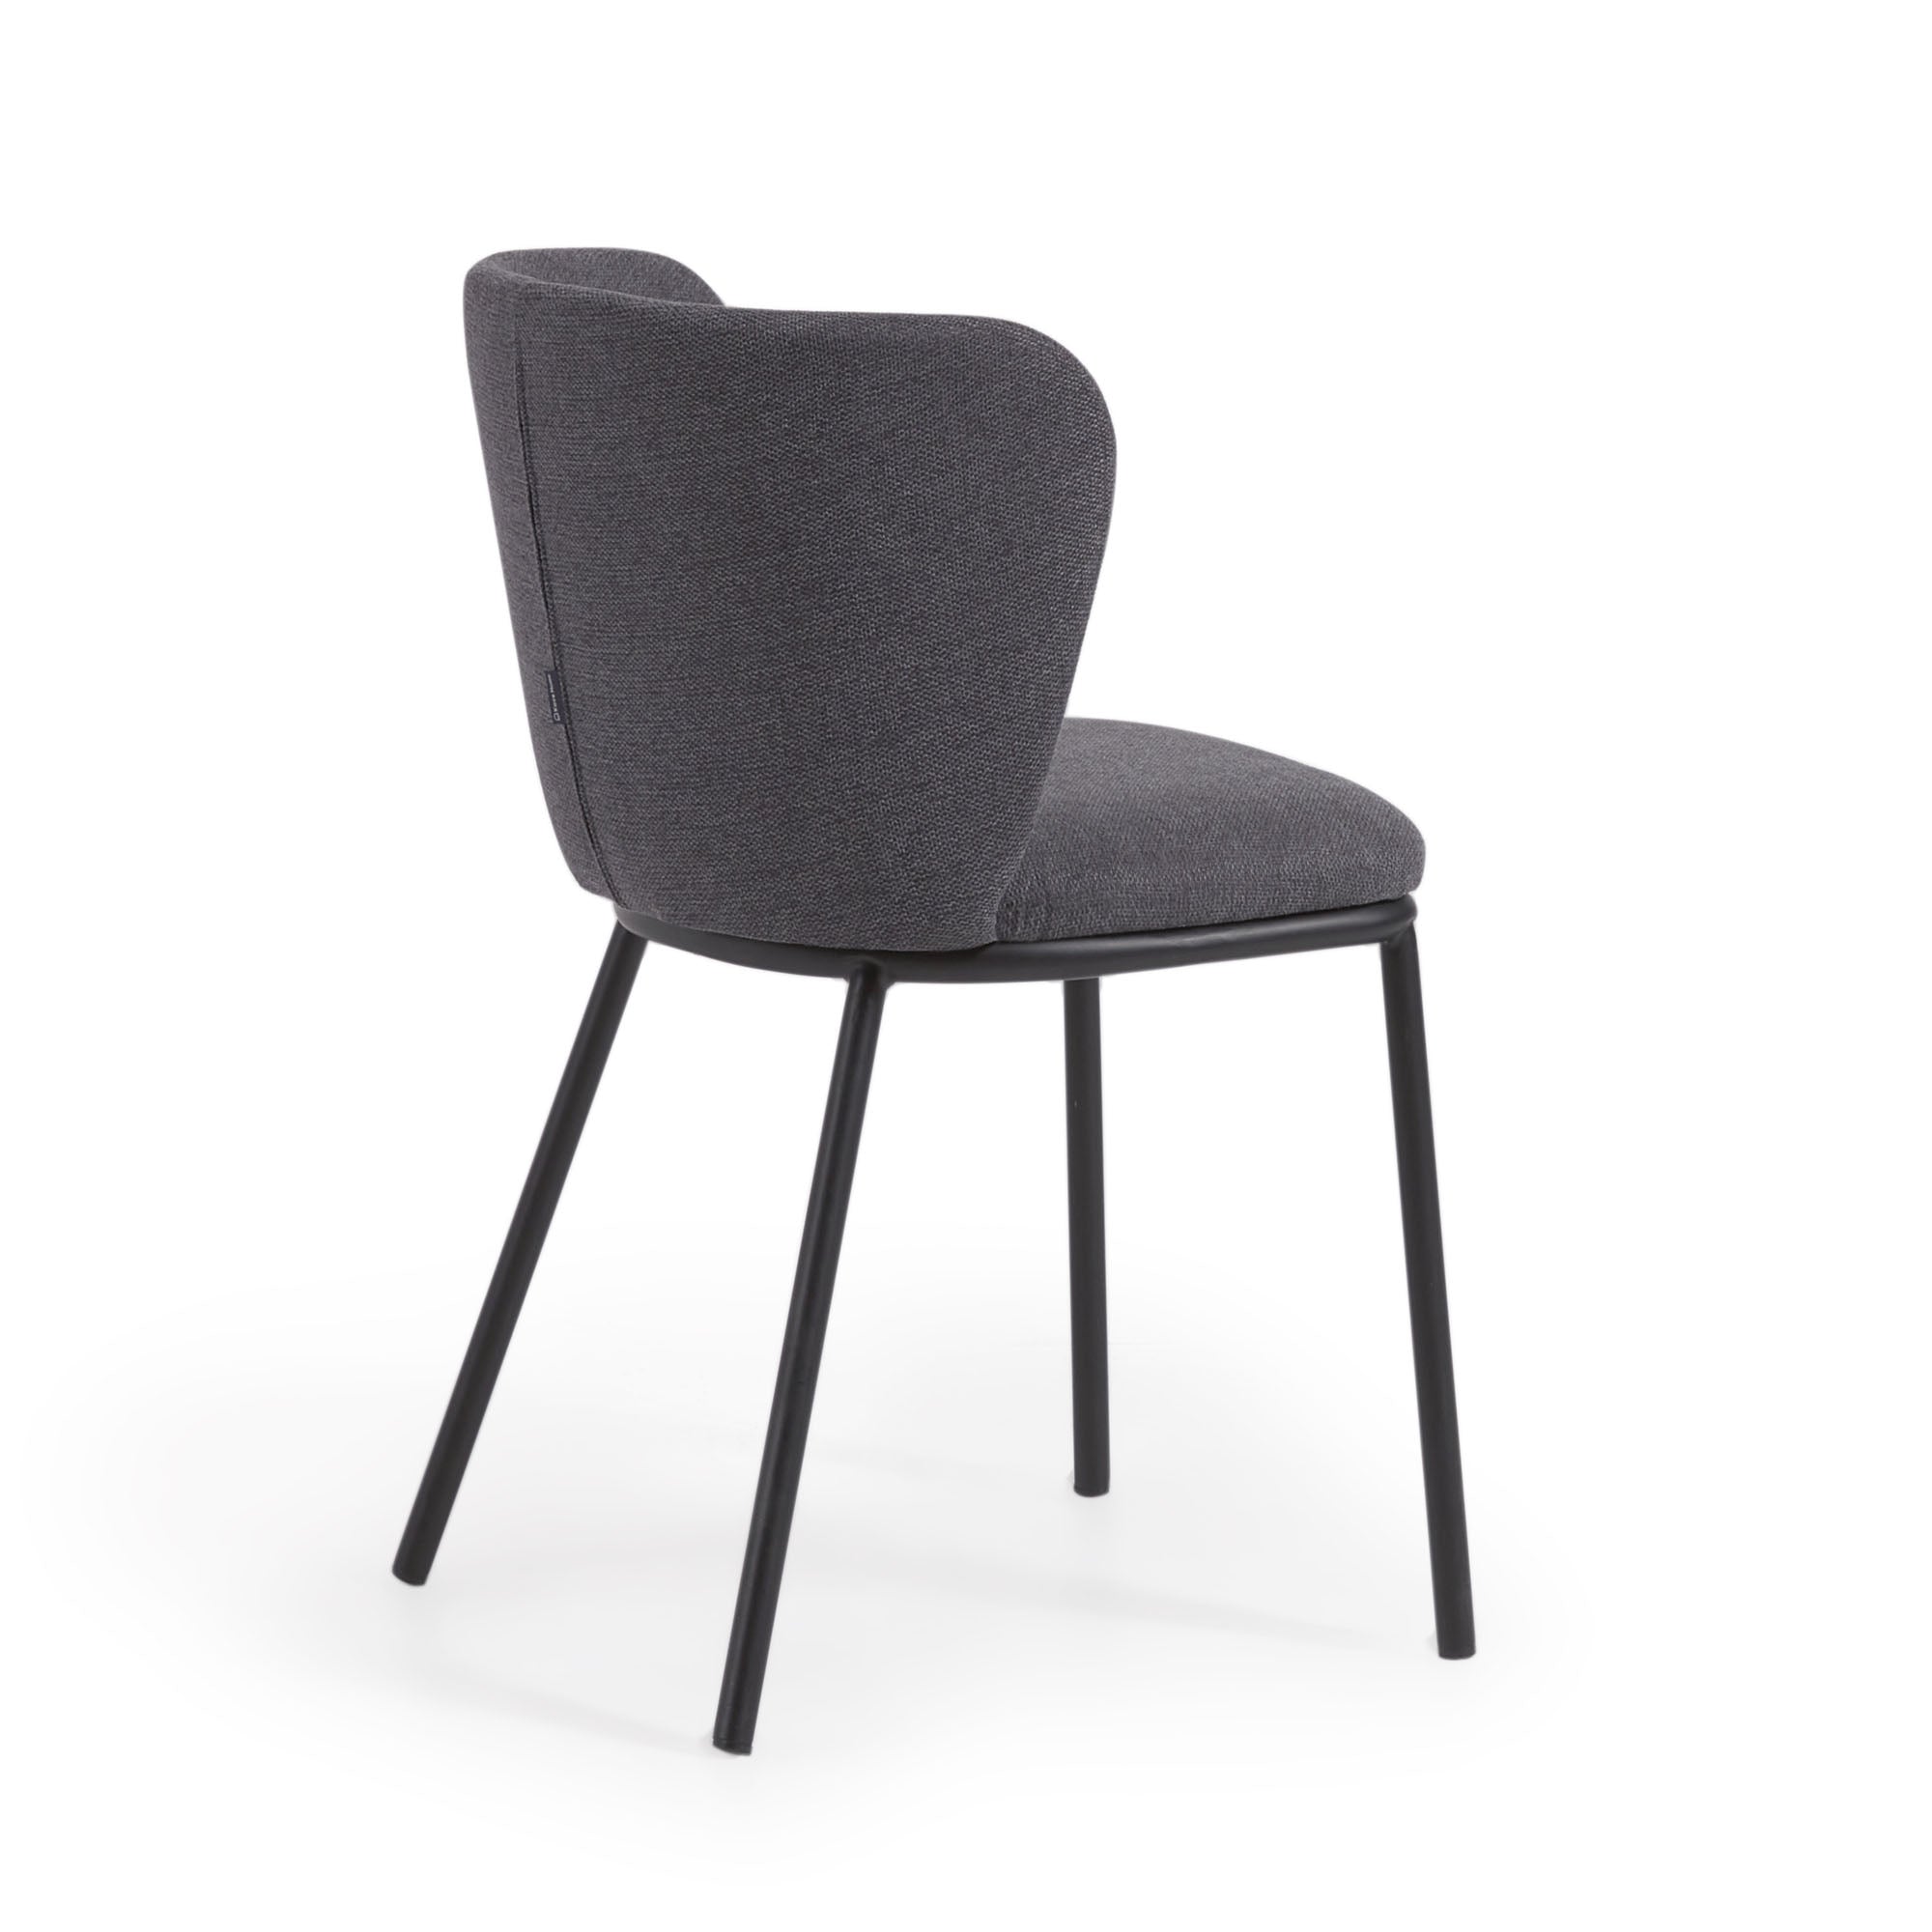 Ciselia chair in dark grey chenille and black steel